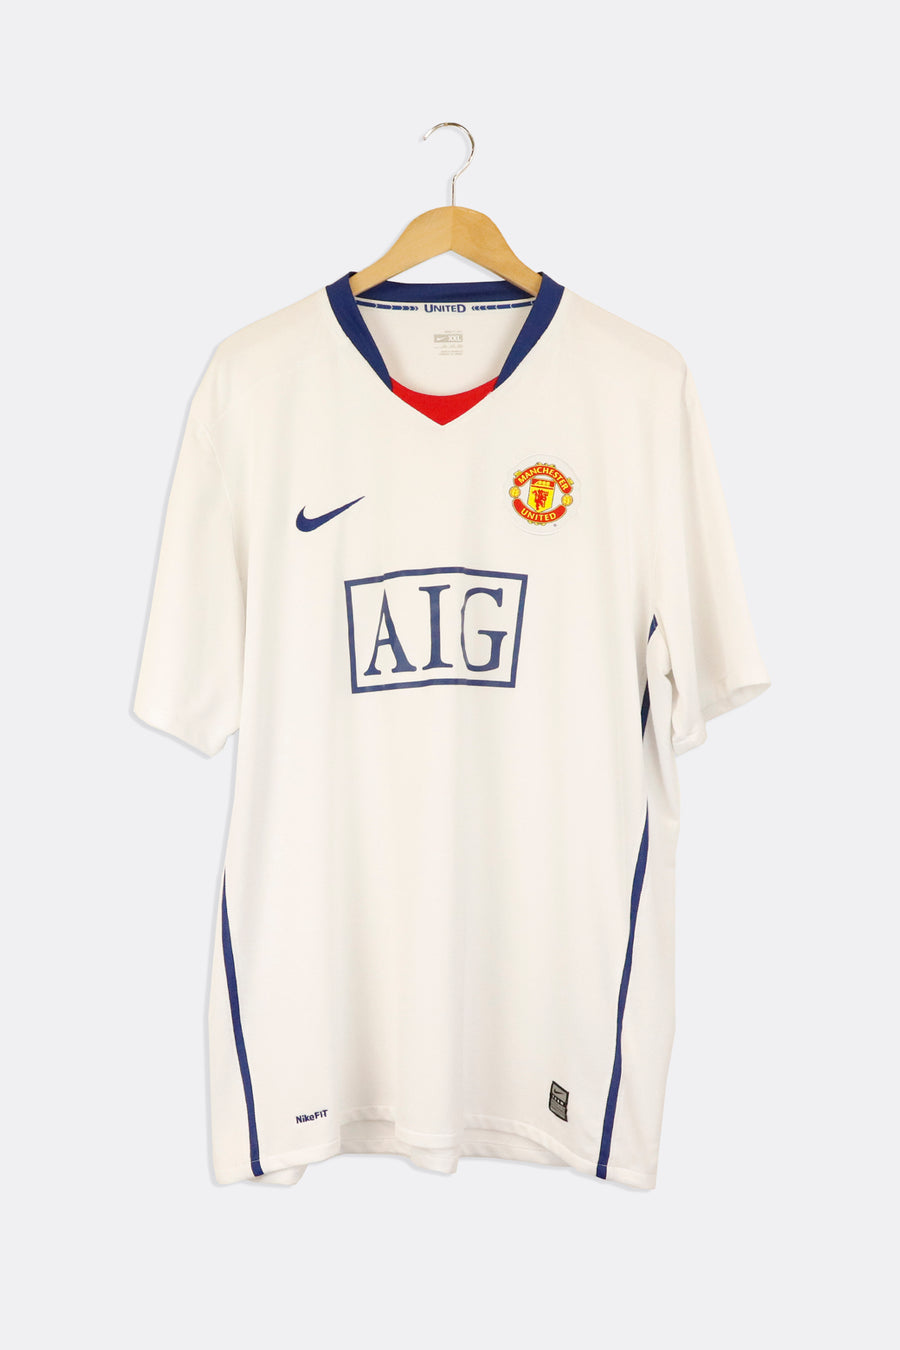 Vintage Manchester United Aig Sponsor Soccer Jersey Sz 2XL